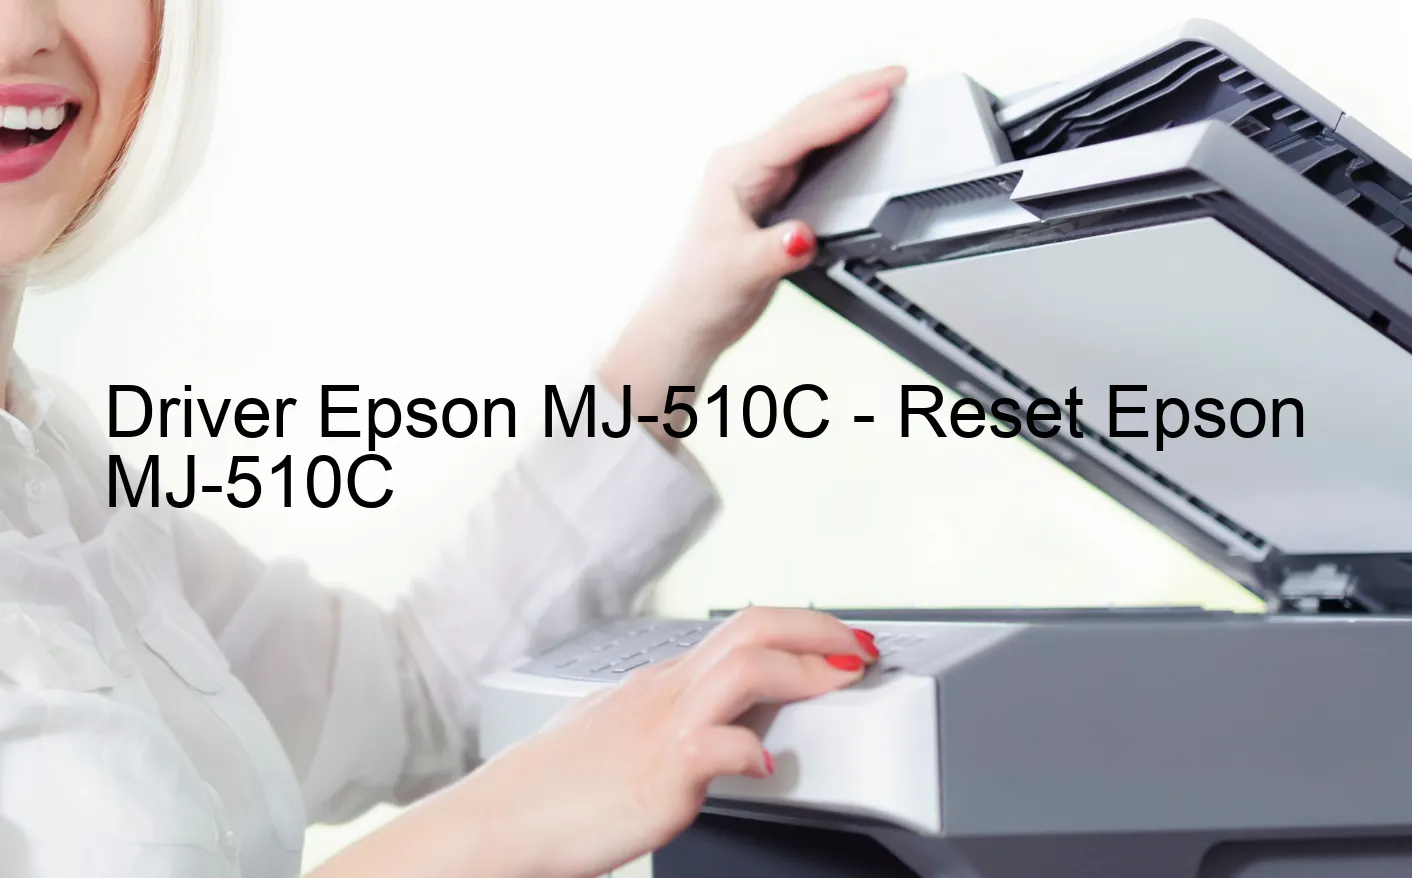 Epson MJ-510Cのドライバー、Epson MJ-510Cのリセットソフトウェア